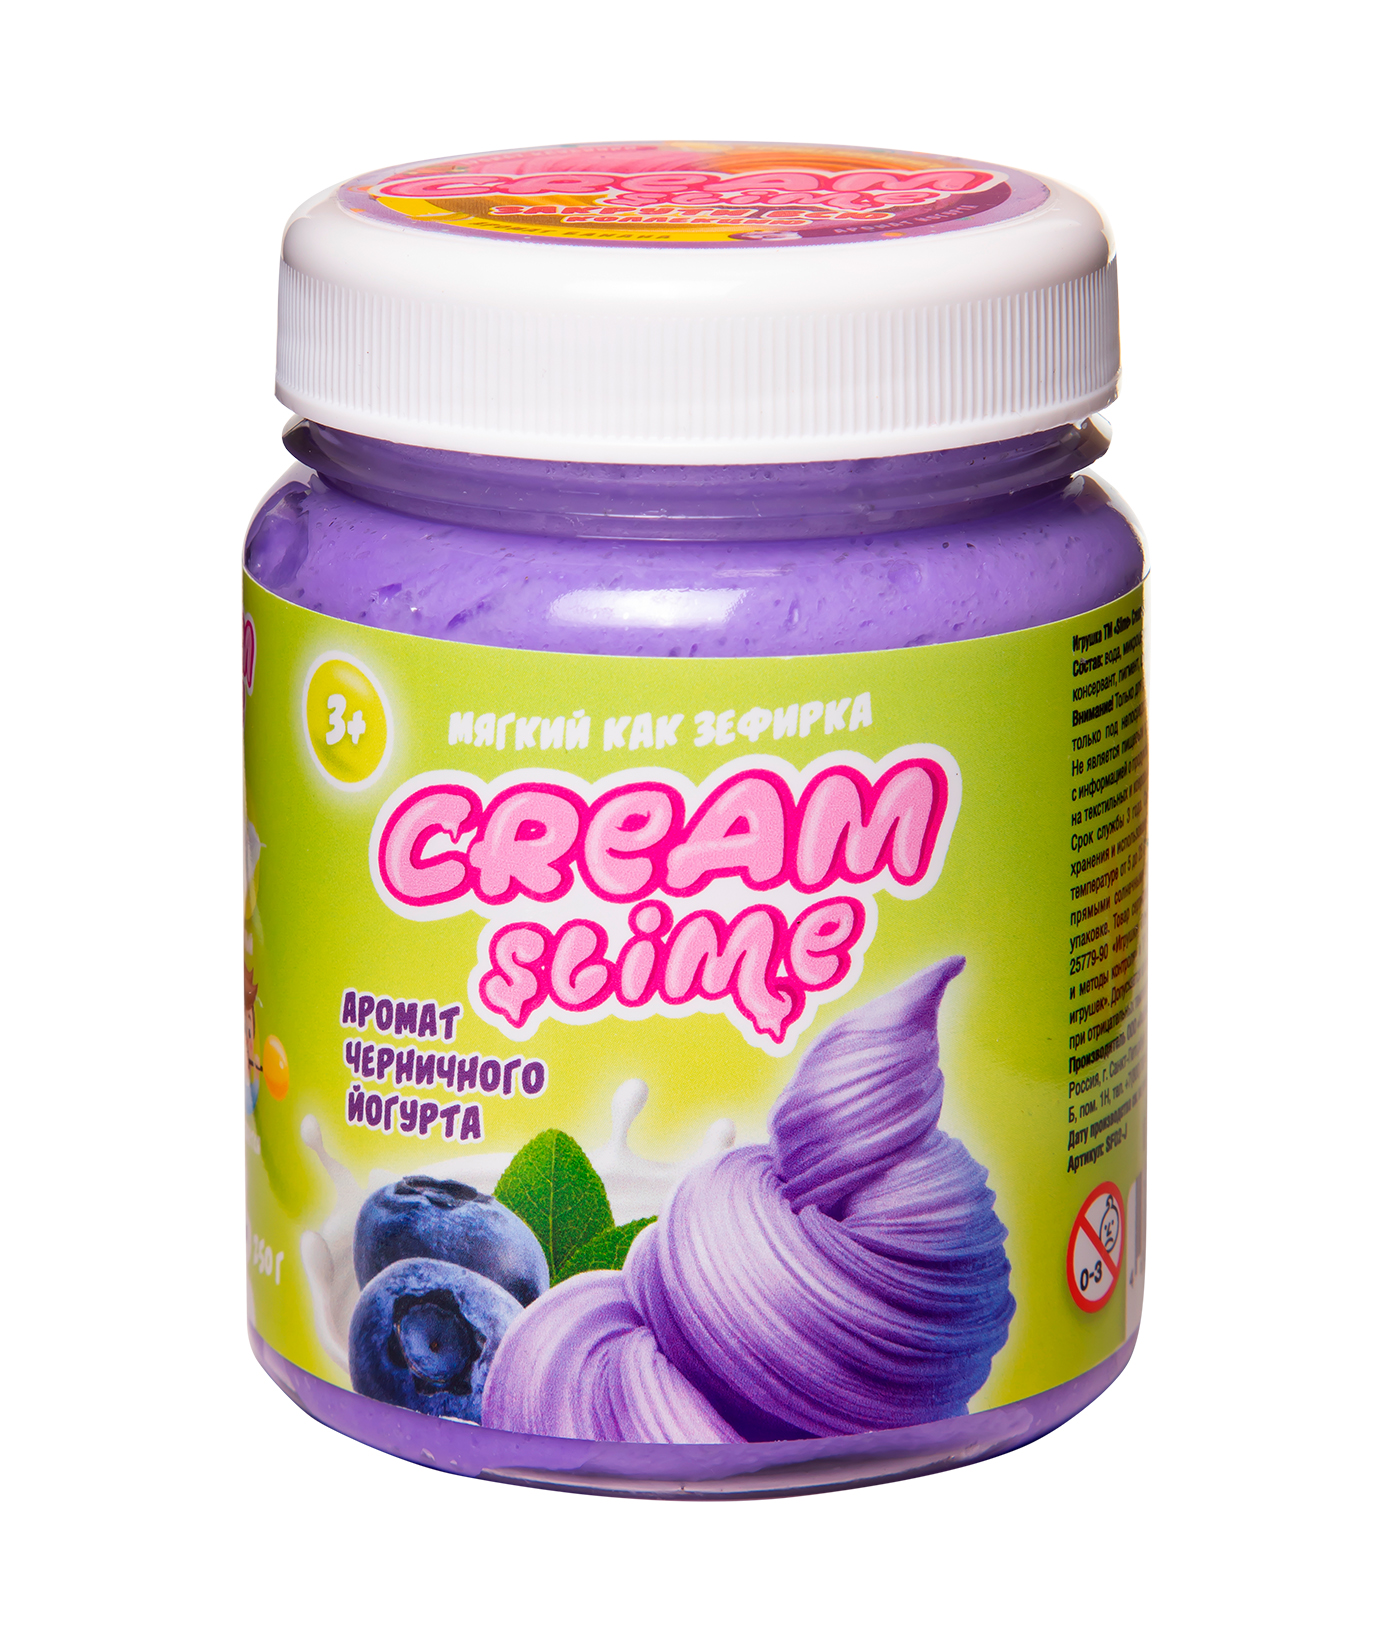 Слайм Cream с ароматом черничного йогурта, 250 г Slime игрушка cream slime с ароматом клубники 250 г